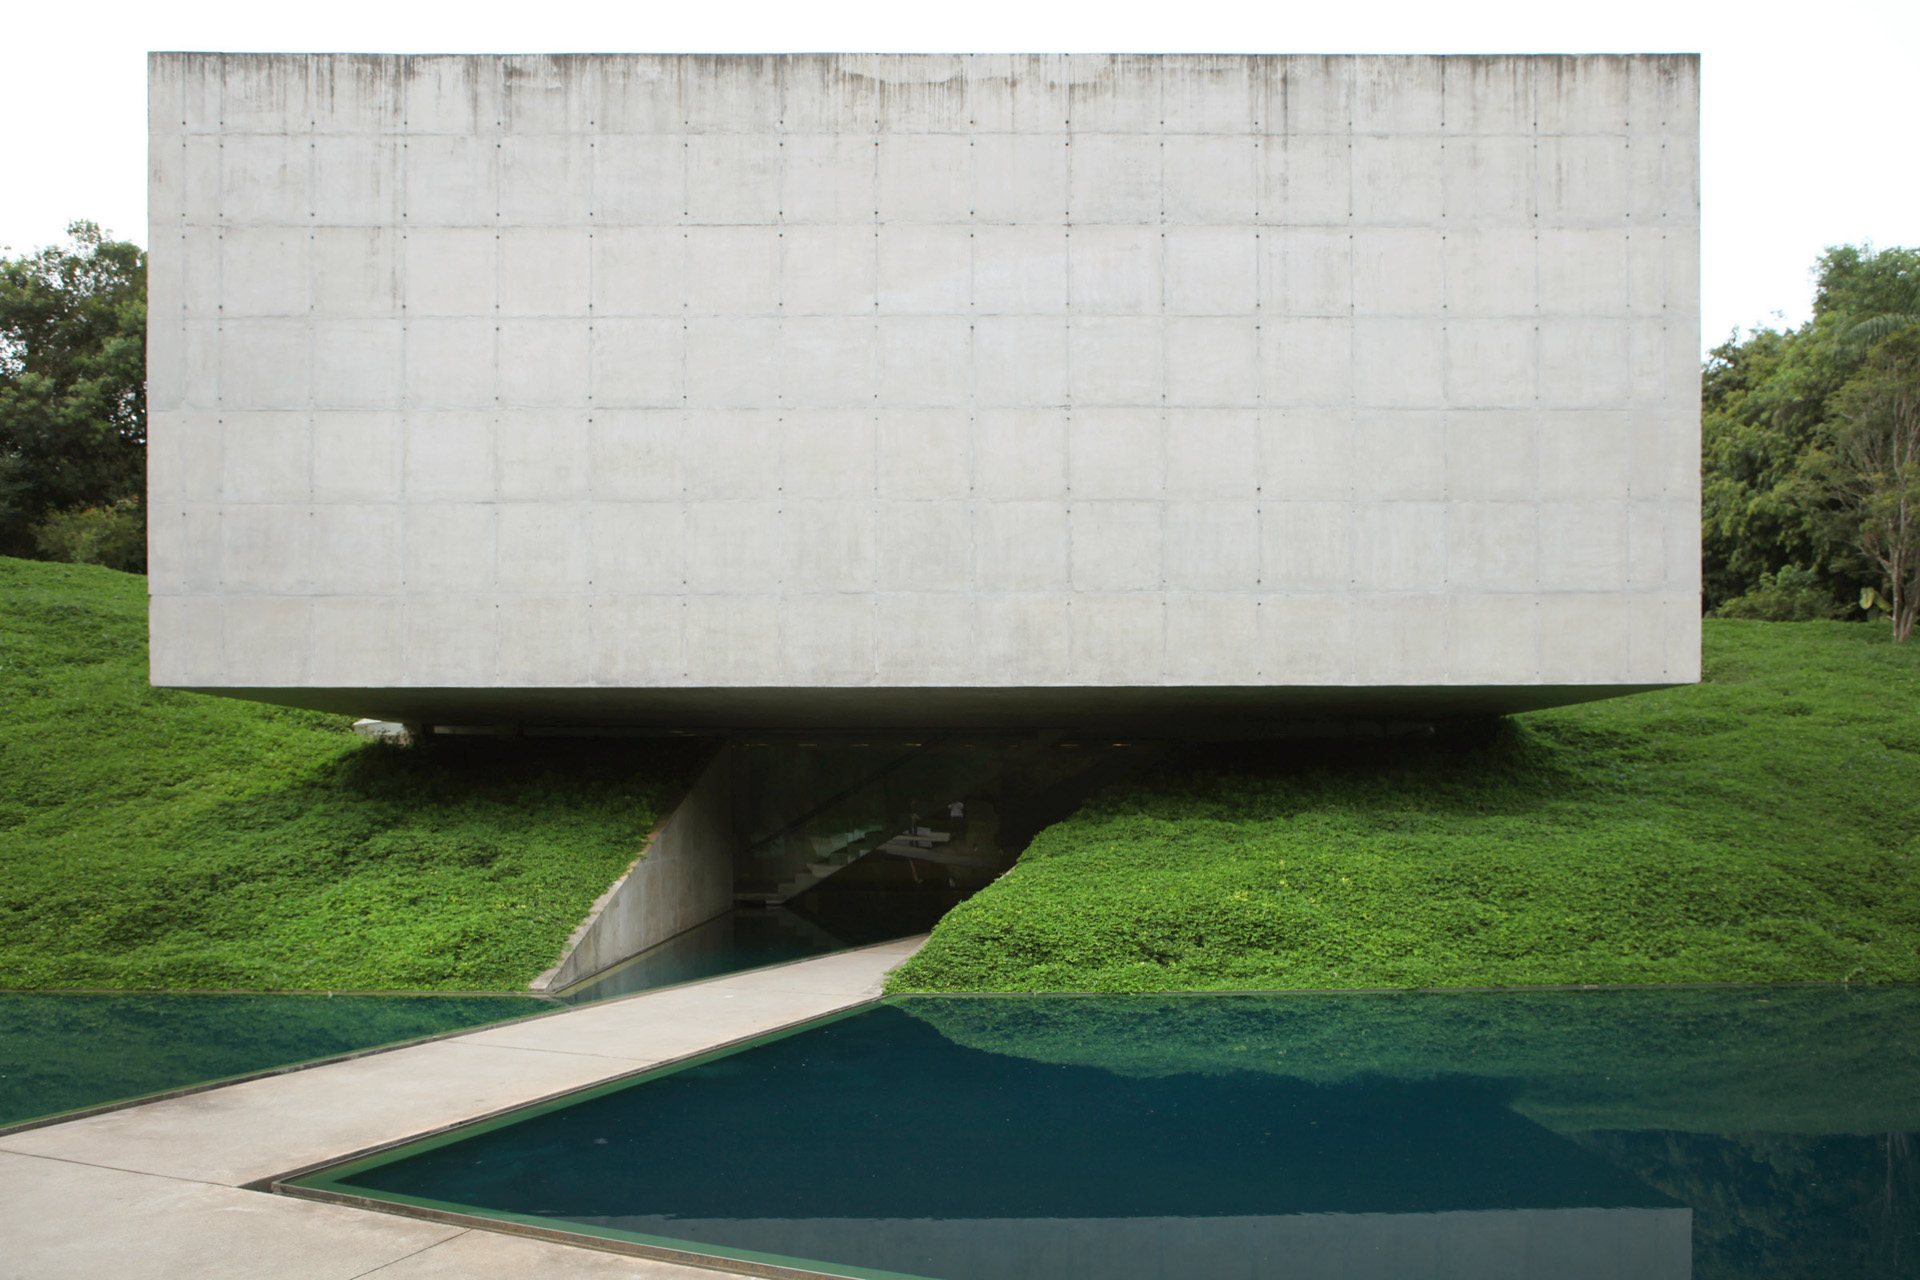 Center for Contemporary Art Inhotim Brazil - Insight Architecture.jpg